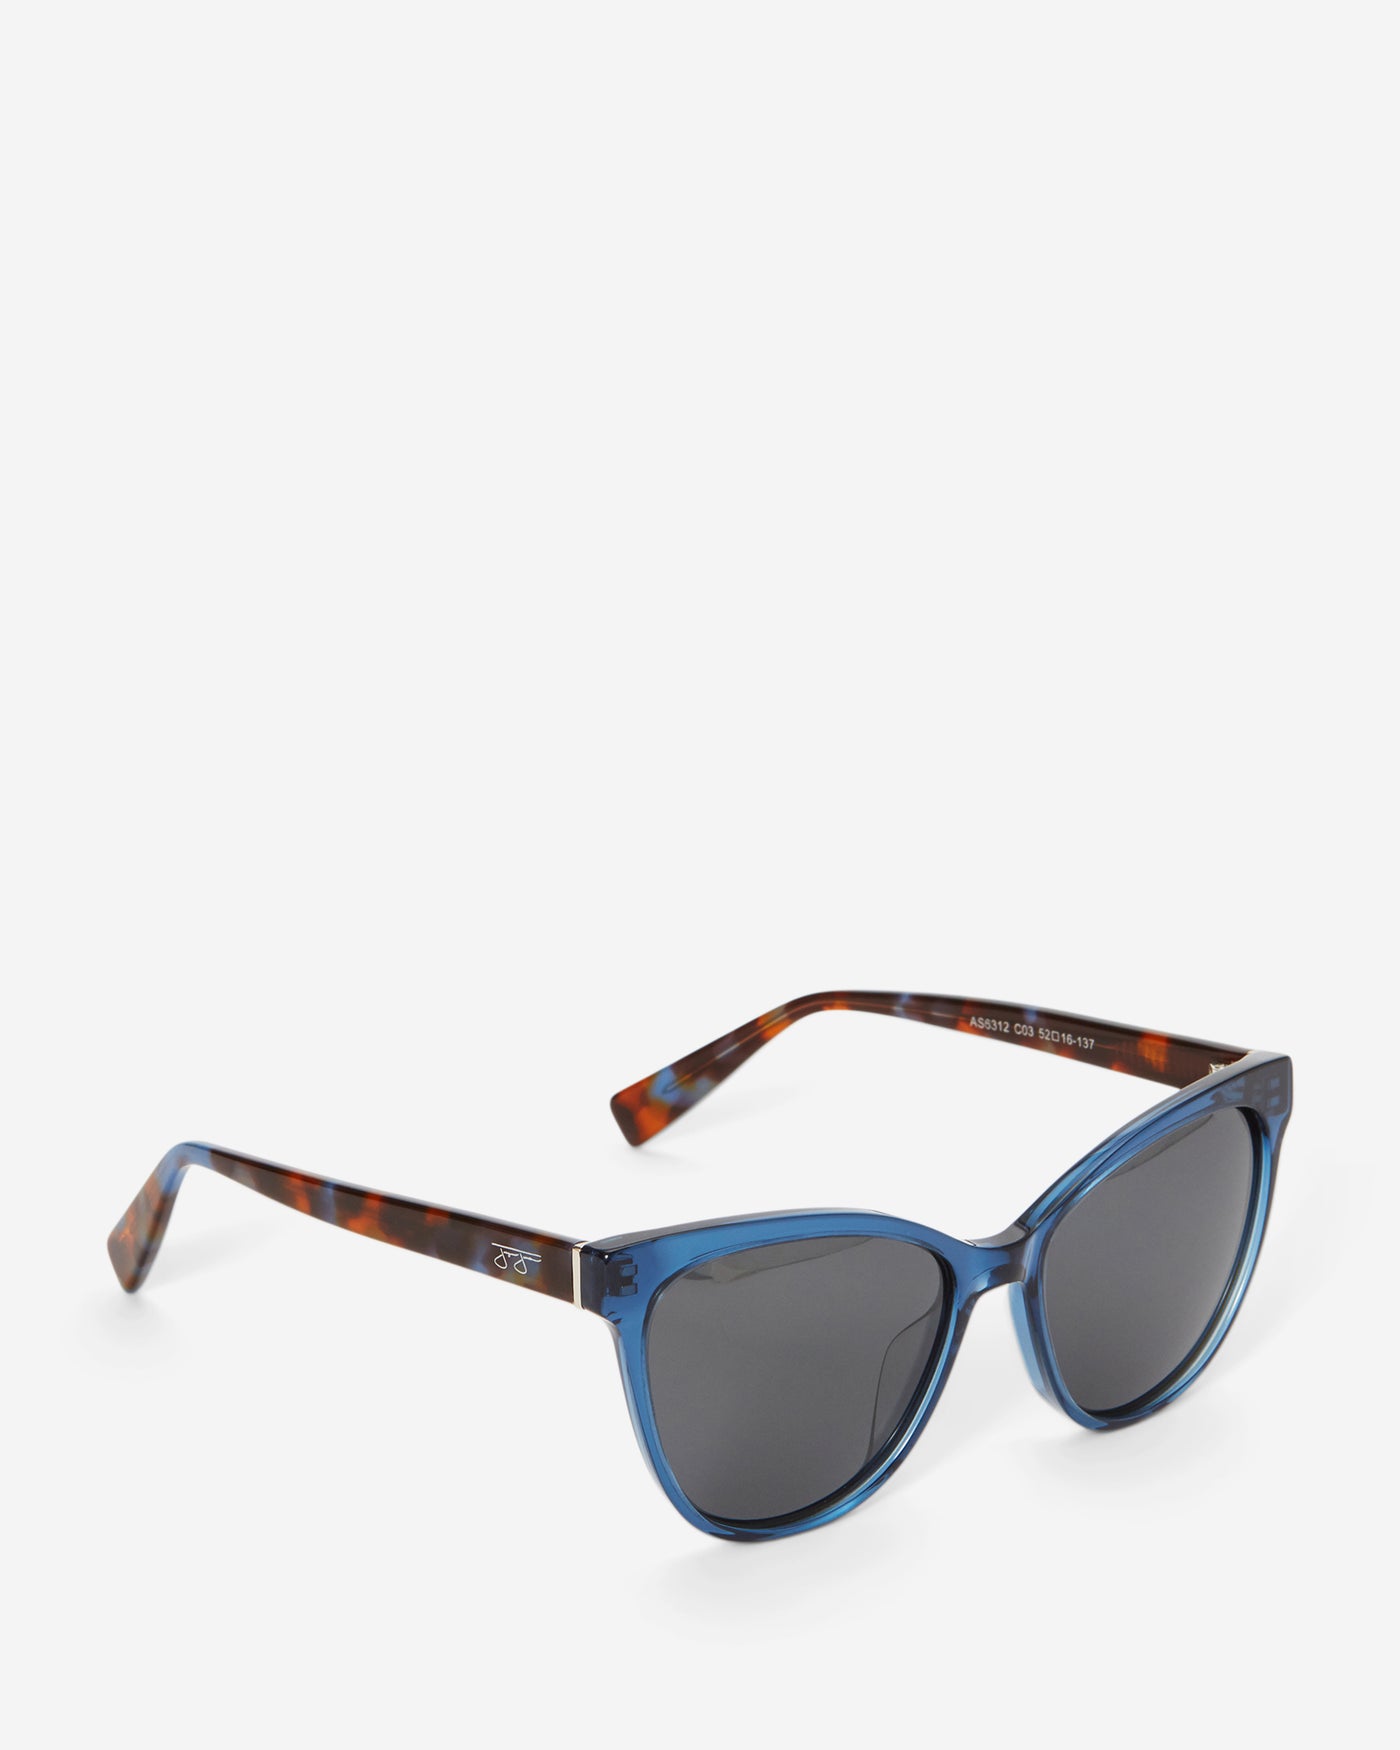 Modern Cat Eye Sunglasses - Blue and Tortoise Frame Sunglasses Joey James, The Label   